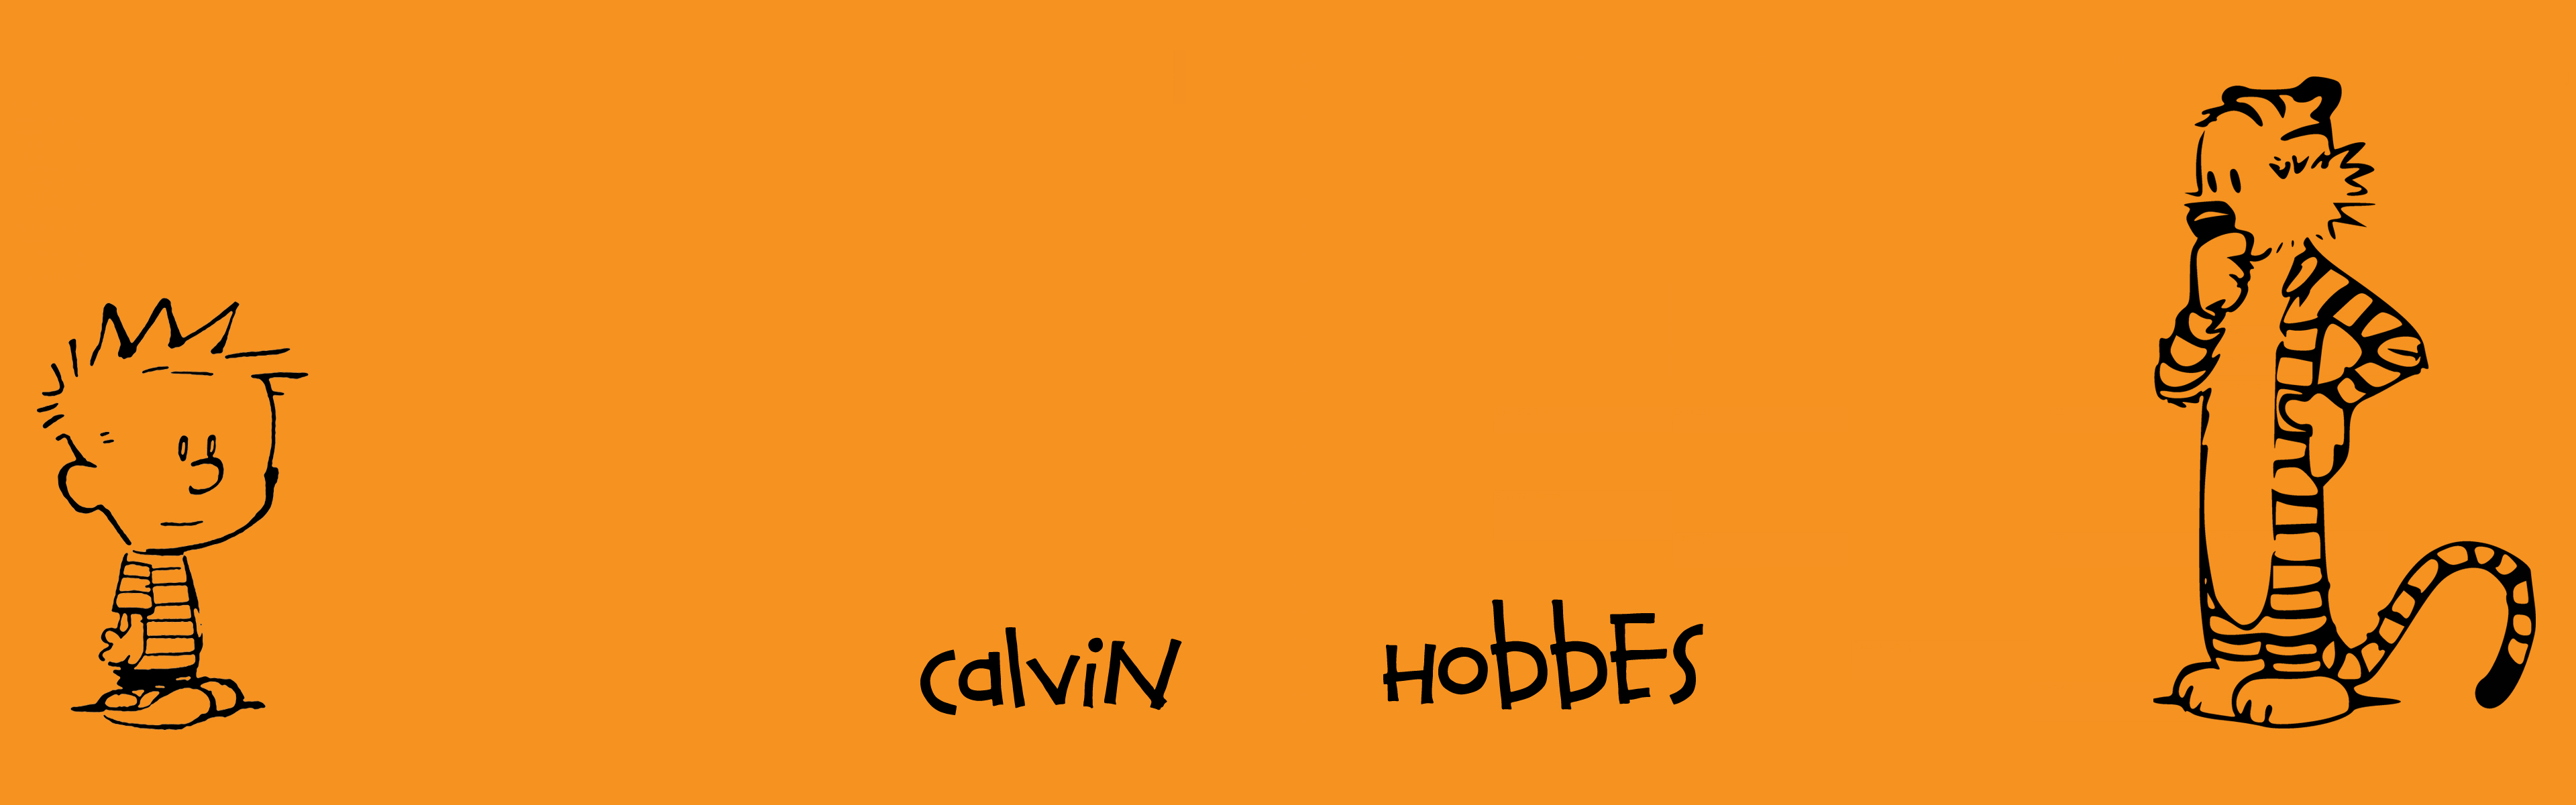 Calvin And Hobbes Comics Minimalism Dual Monitors Multiple Display 3840x1200